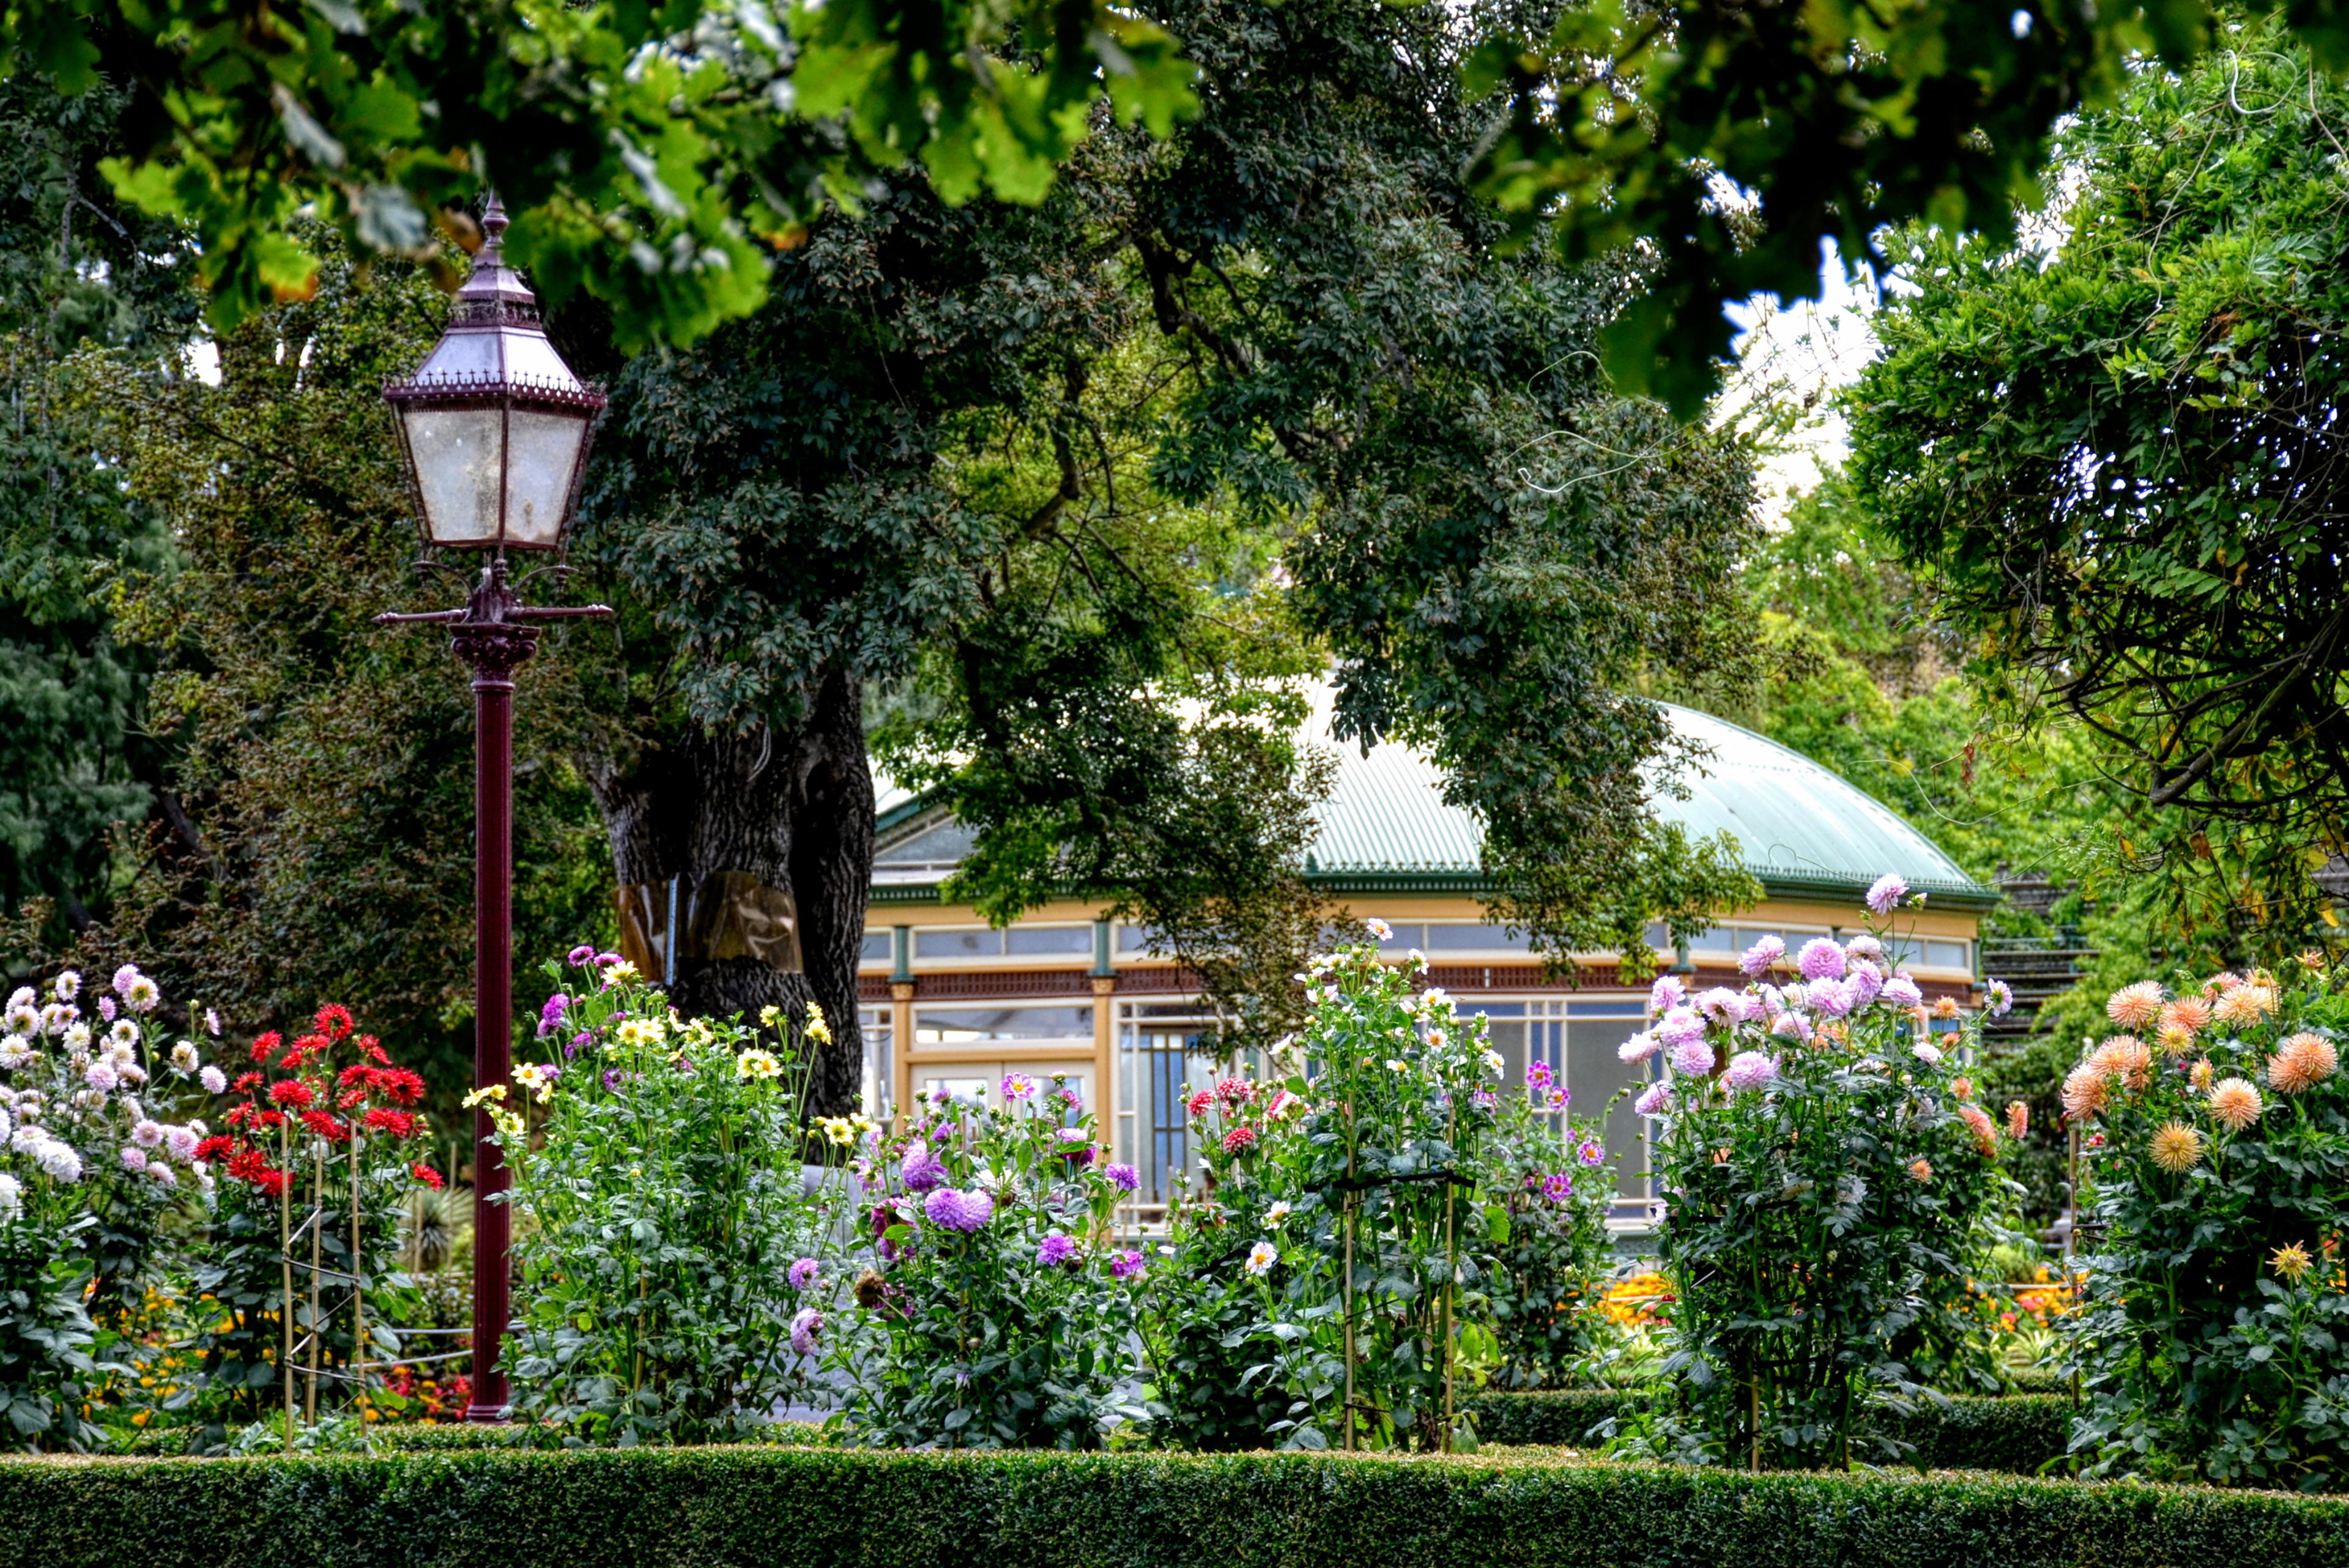 Flowers and Statutory Pavilion at the Ballarat Botanical Gardens Reserve. 